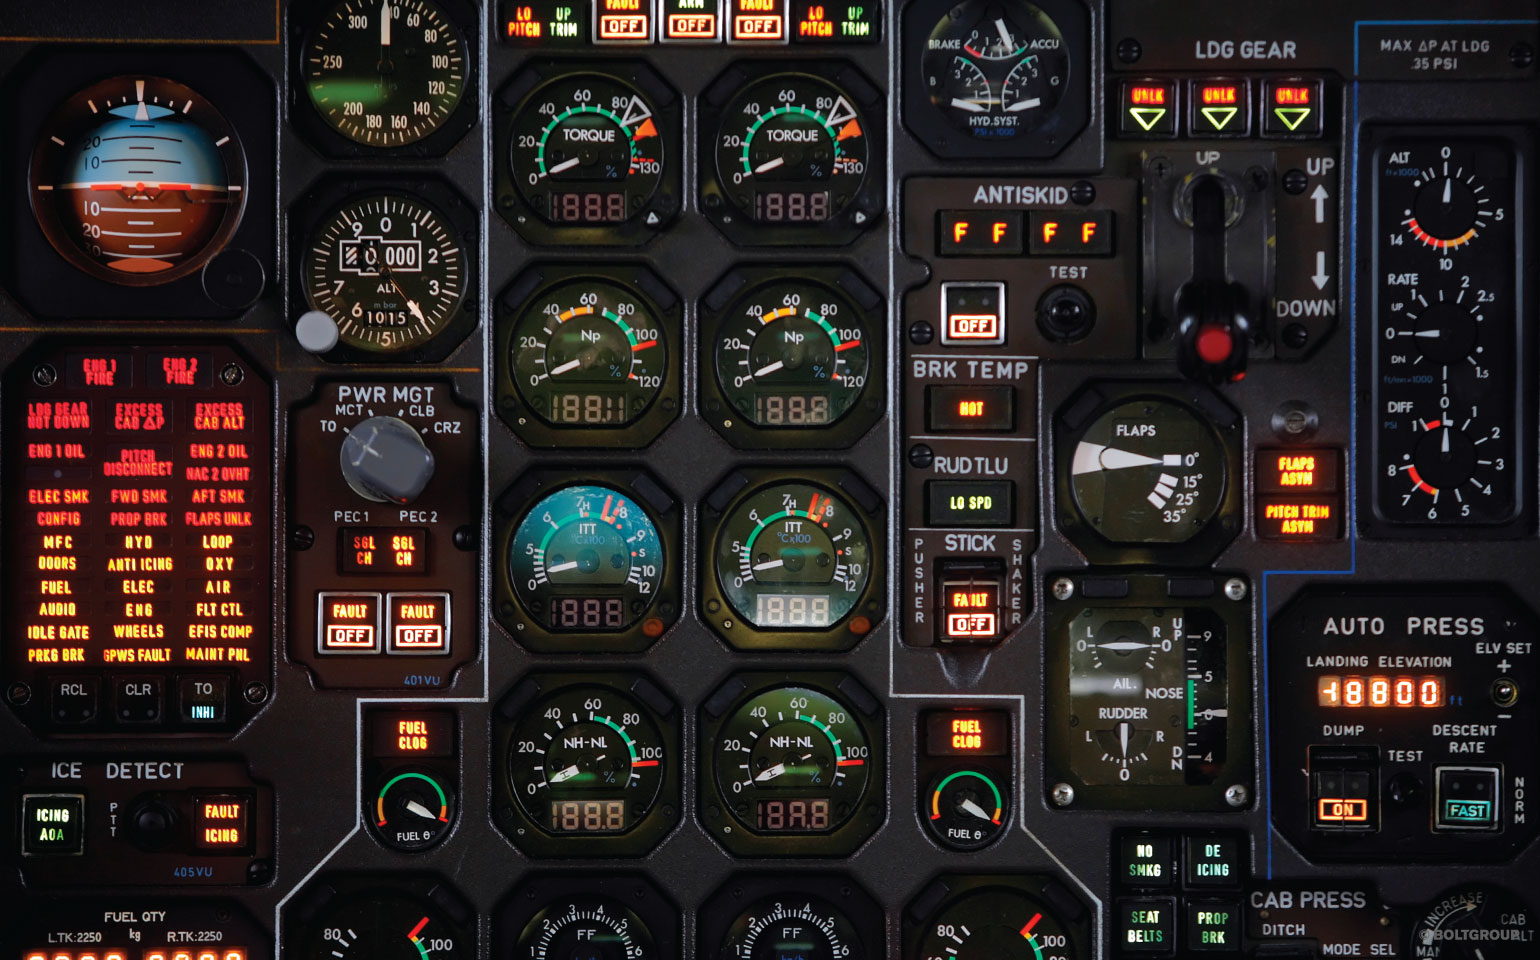 controls of plane